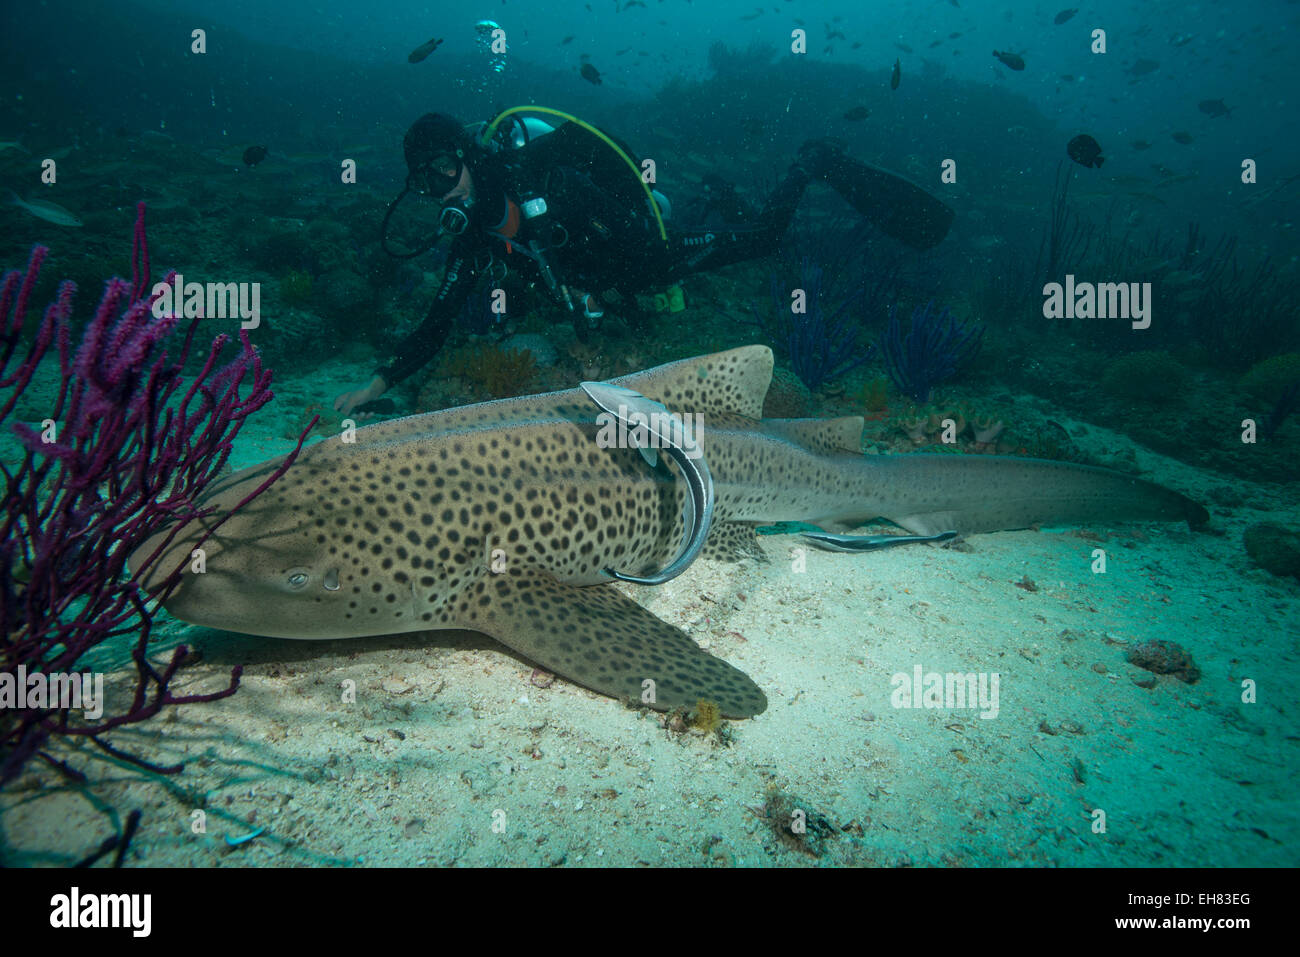 Leopard shark, Dimaniyat Islands, Gulf of Oman, Oman, Middle East Stock Photo